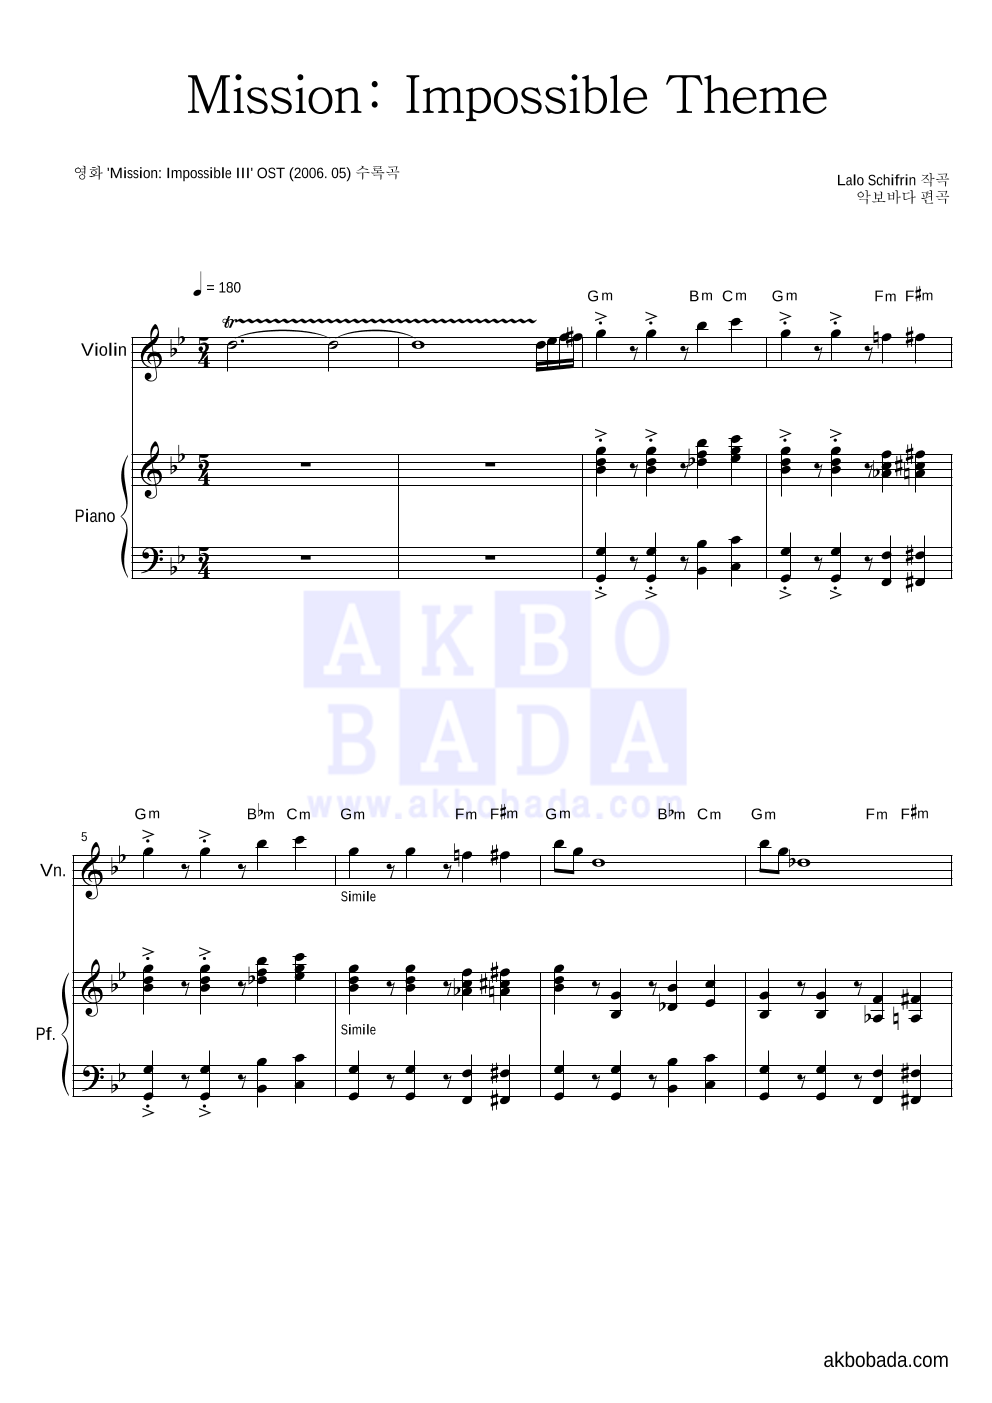 Lalo Schifrin - Mission: Impossible Theme 바이올린&피아노 악보 